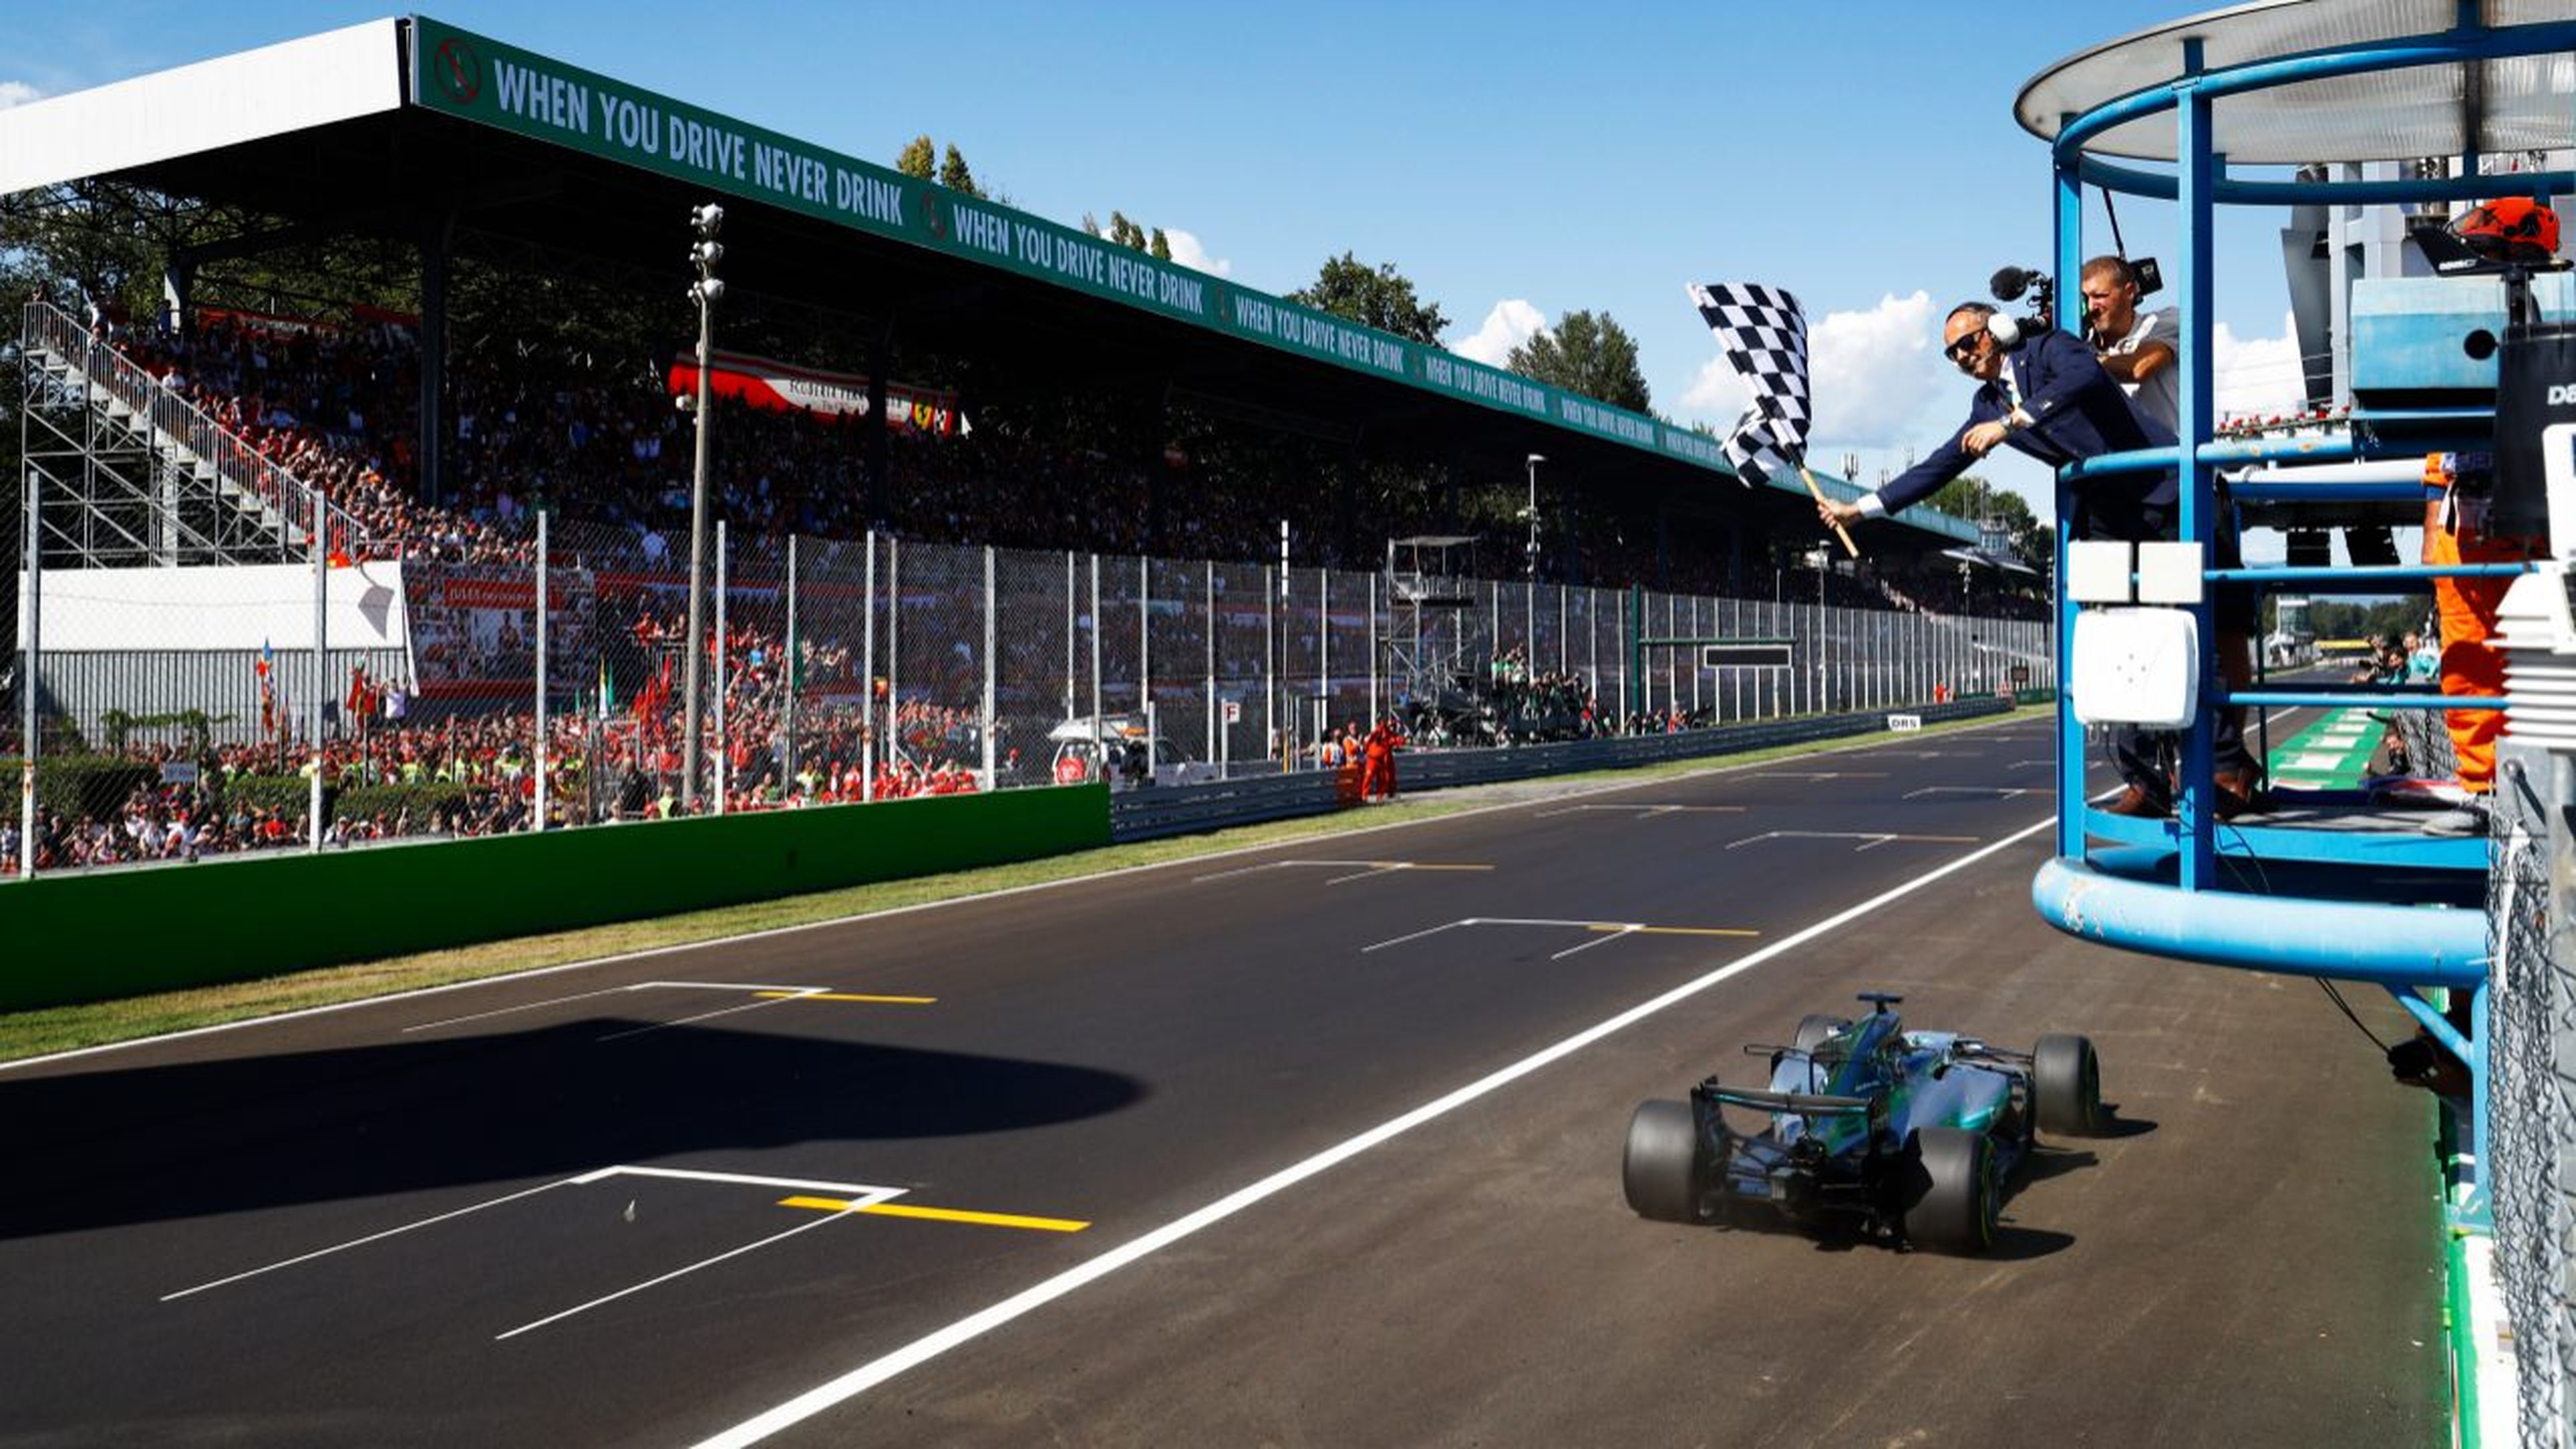 Lewis Hamilton gana en Monza